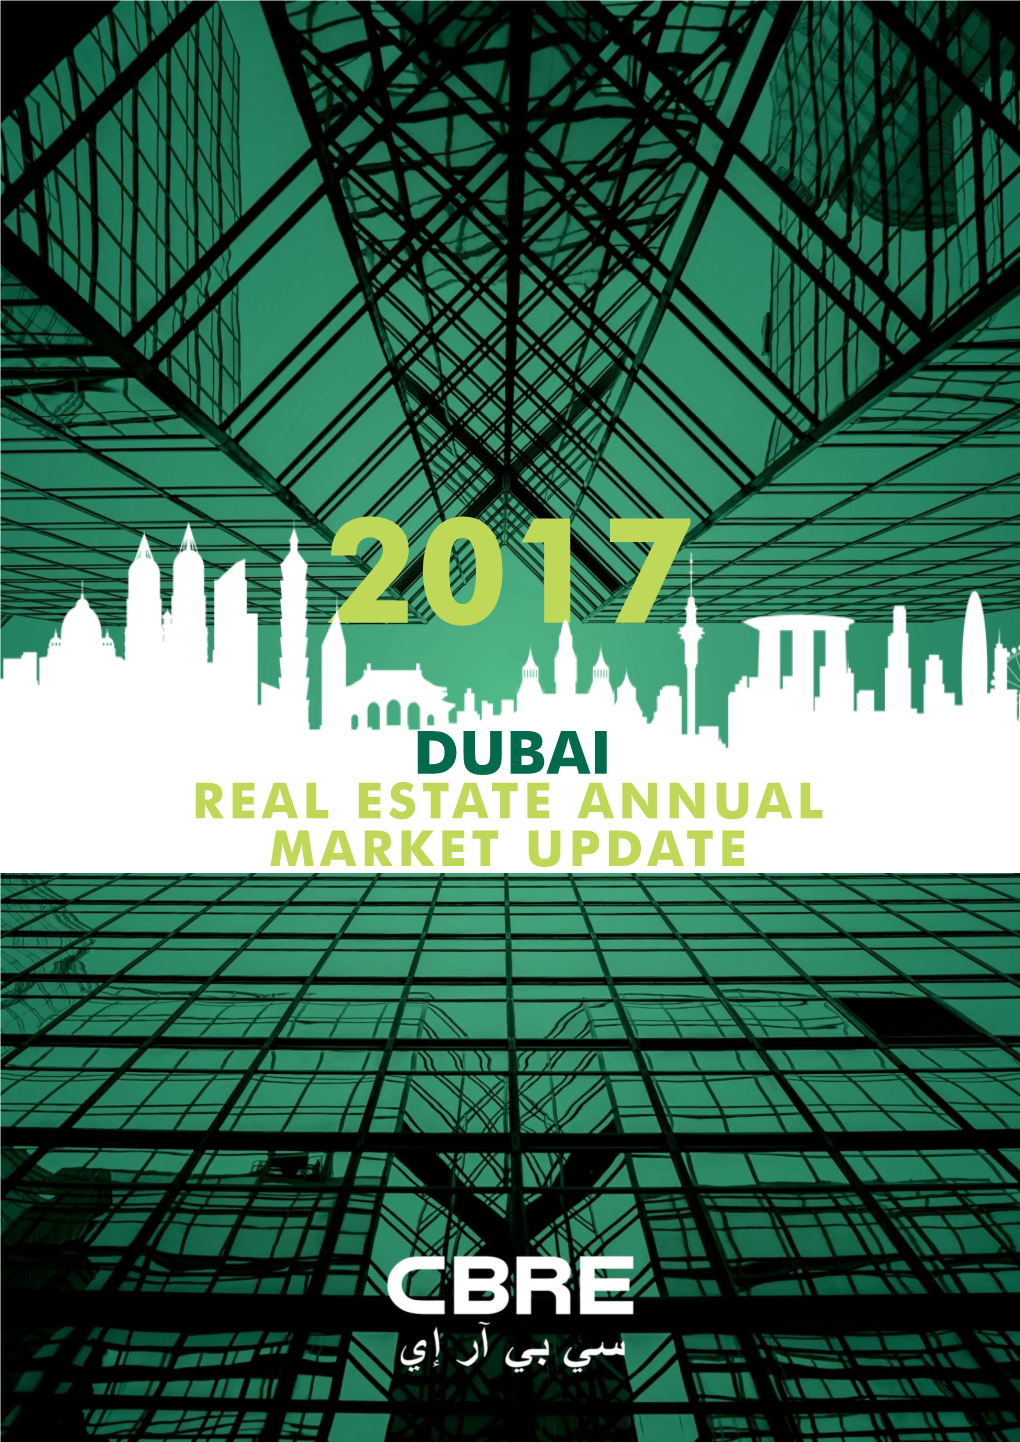 Real Estate Annual Market Update